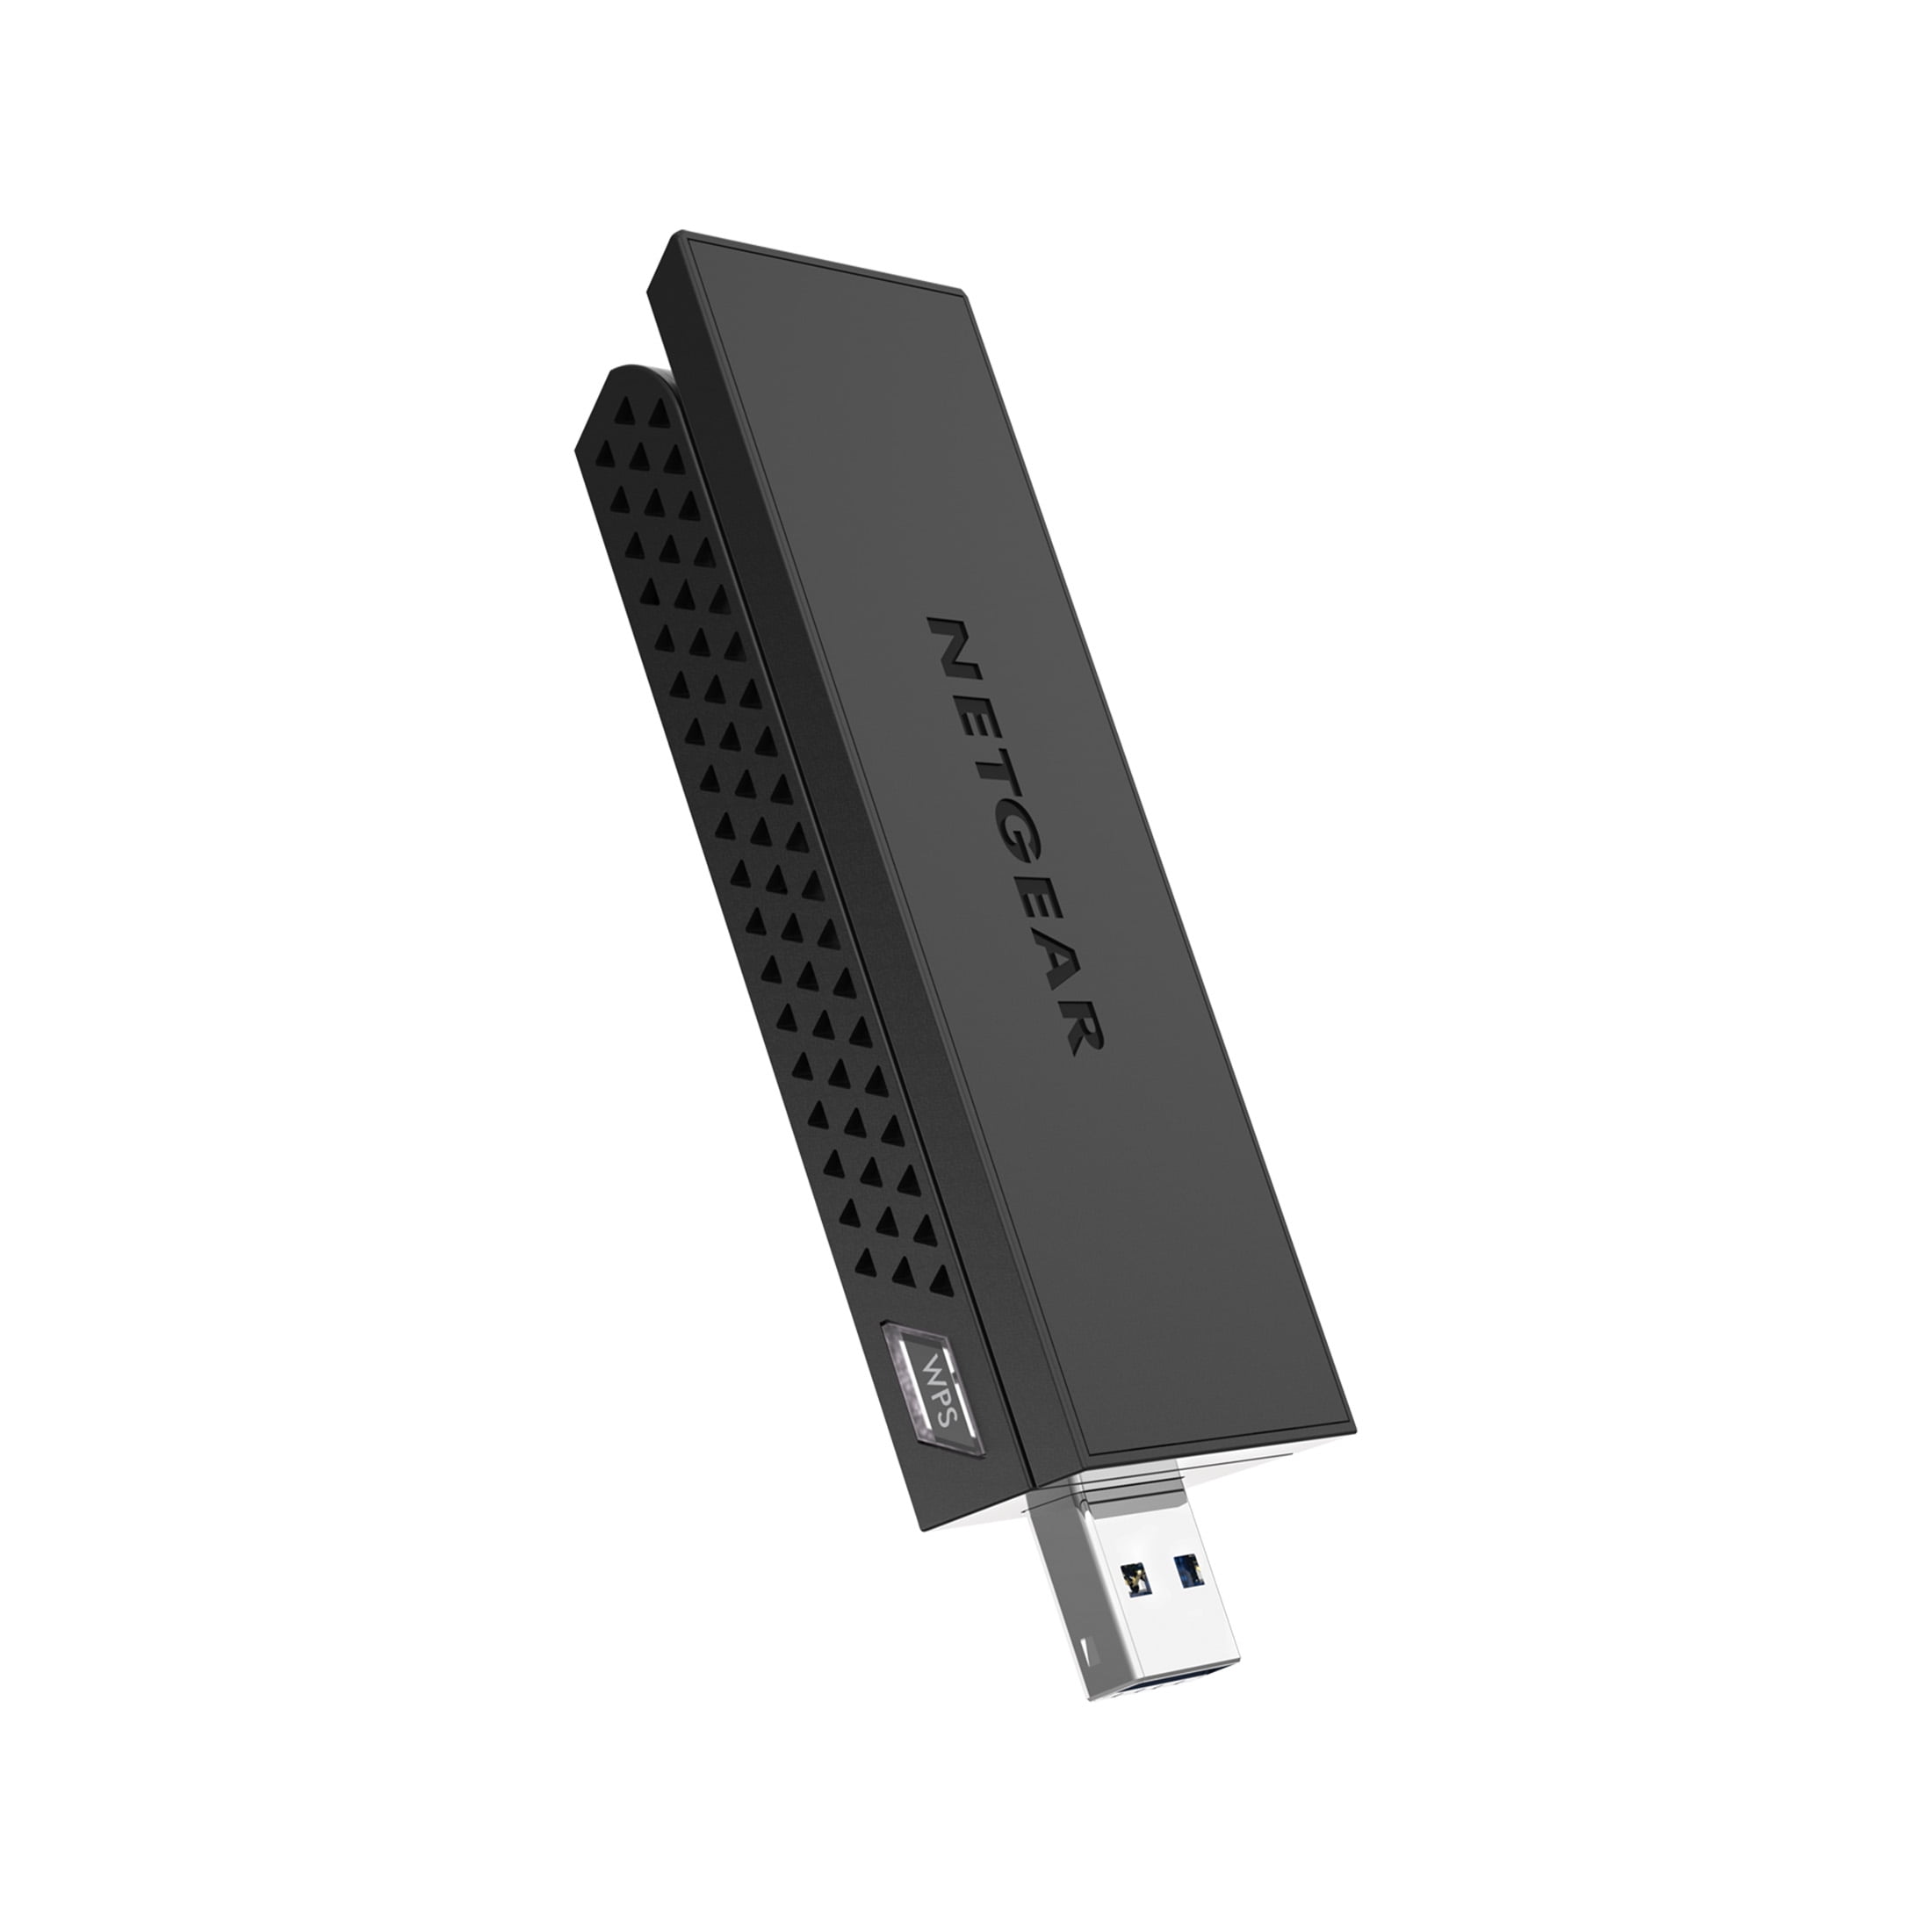 NETGEAR - AC1200 Dual-Band USB 3.0 WiFi Adapter (A6210-10000S)